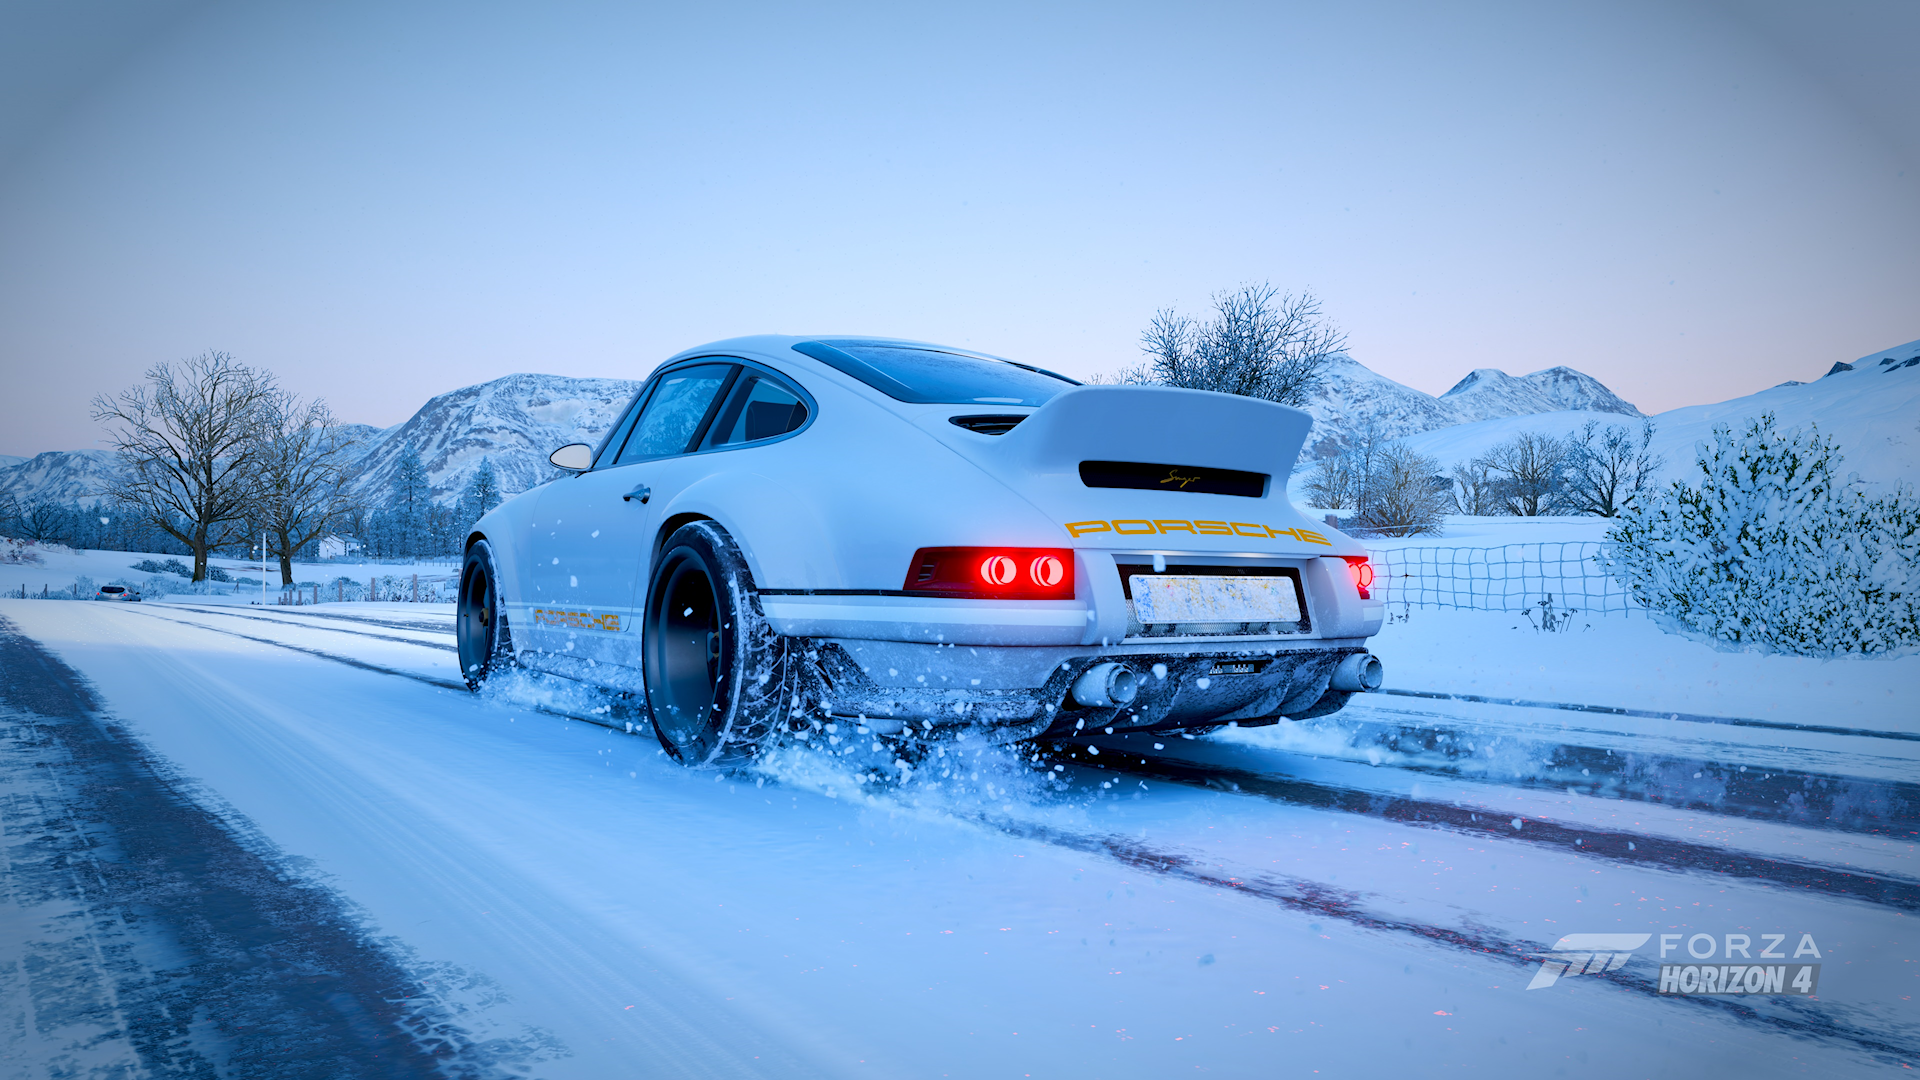 Cool picture I took last winter season. Love the reimagined Porsche